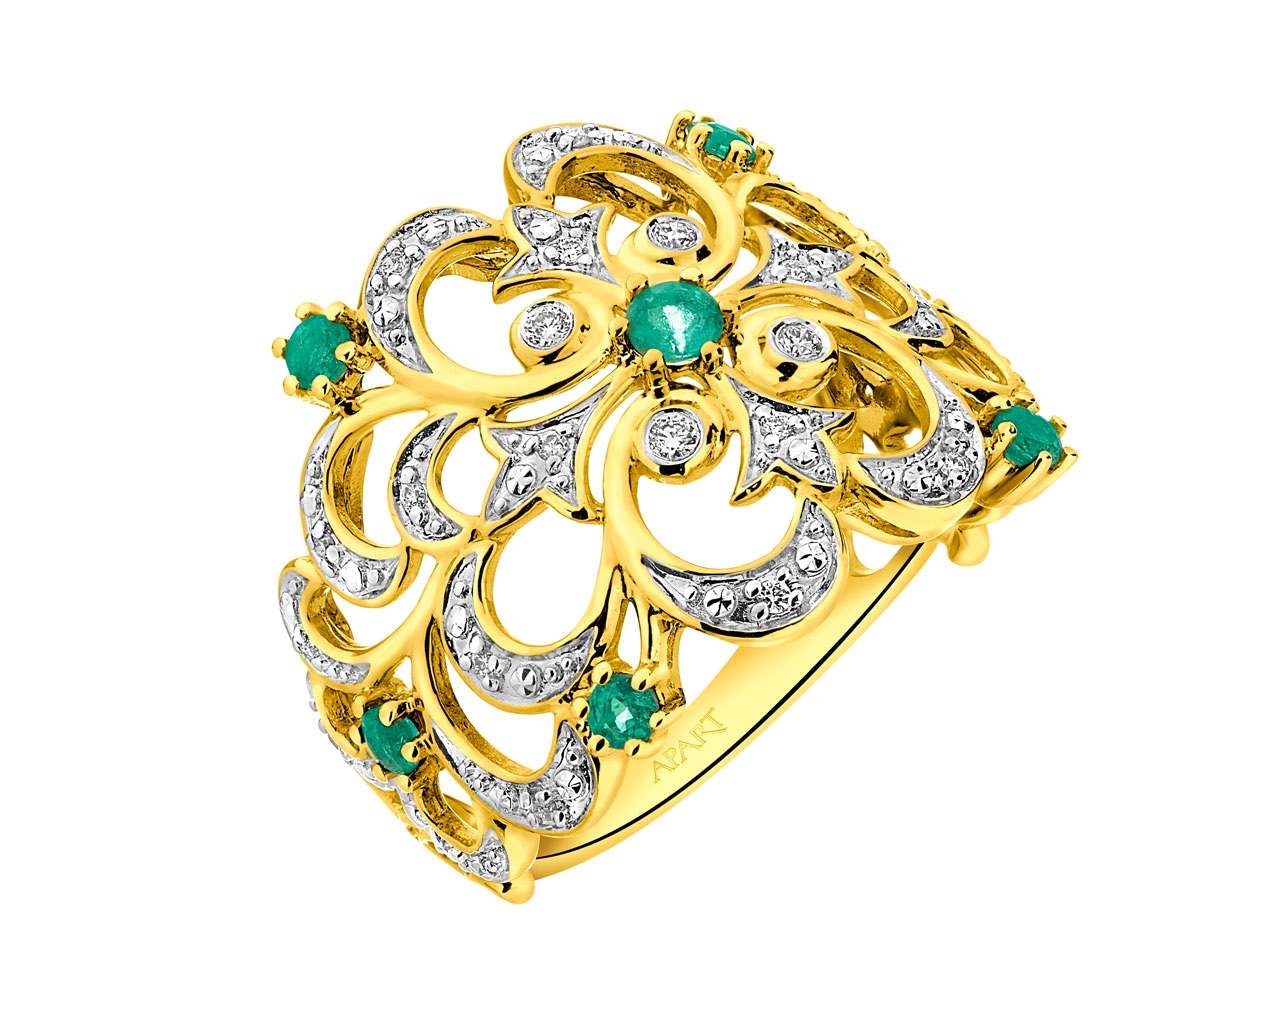 Prsten ze žlutého zlata s brilianty a smaragdy 0,10 ct - ryzost 585